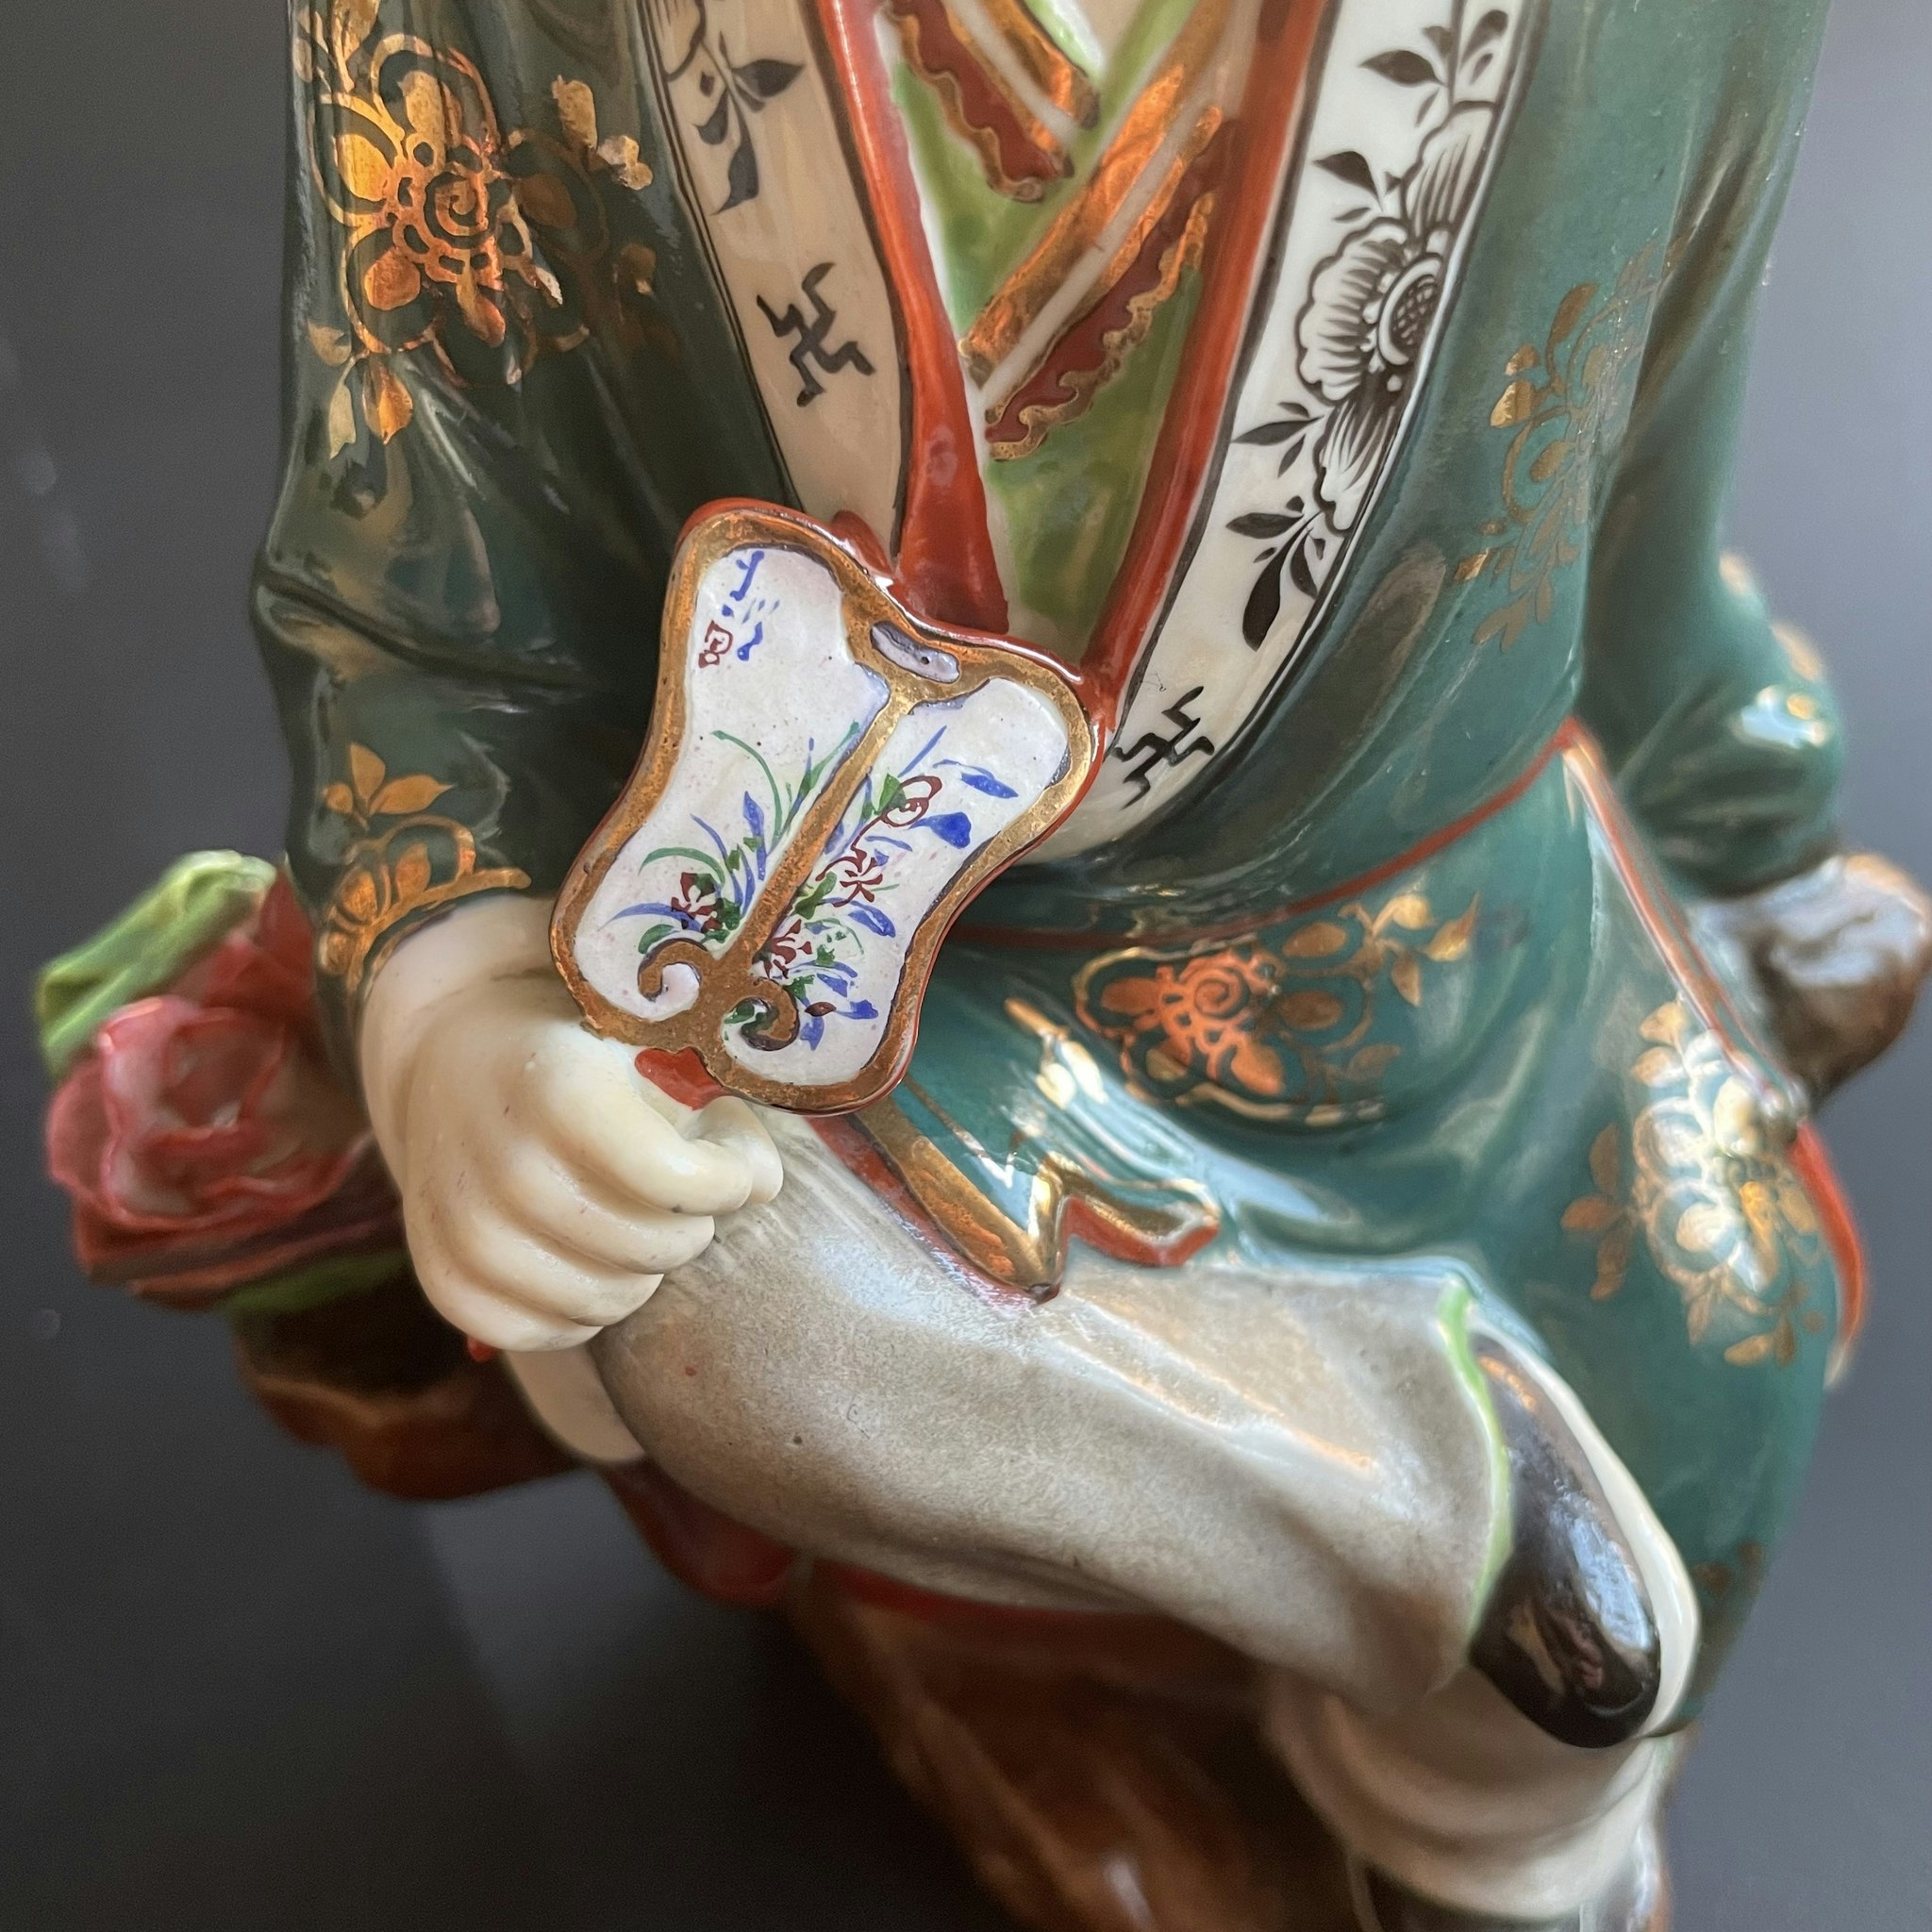 A Vintage / Antique chinese porcelain figurine mid 20th c #1005